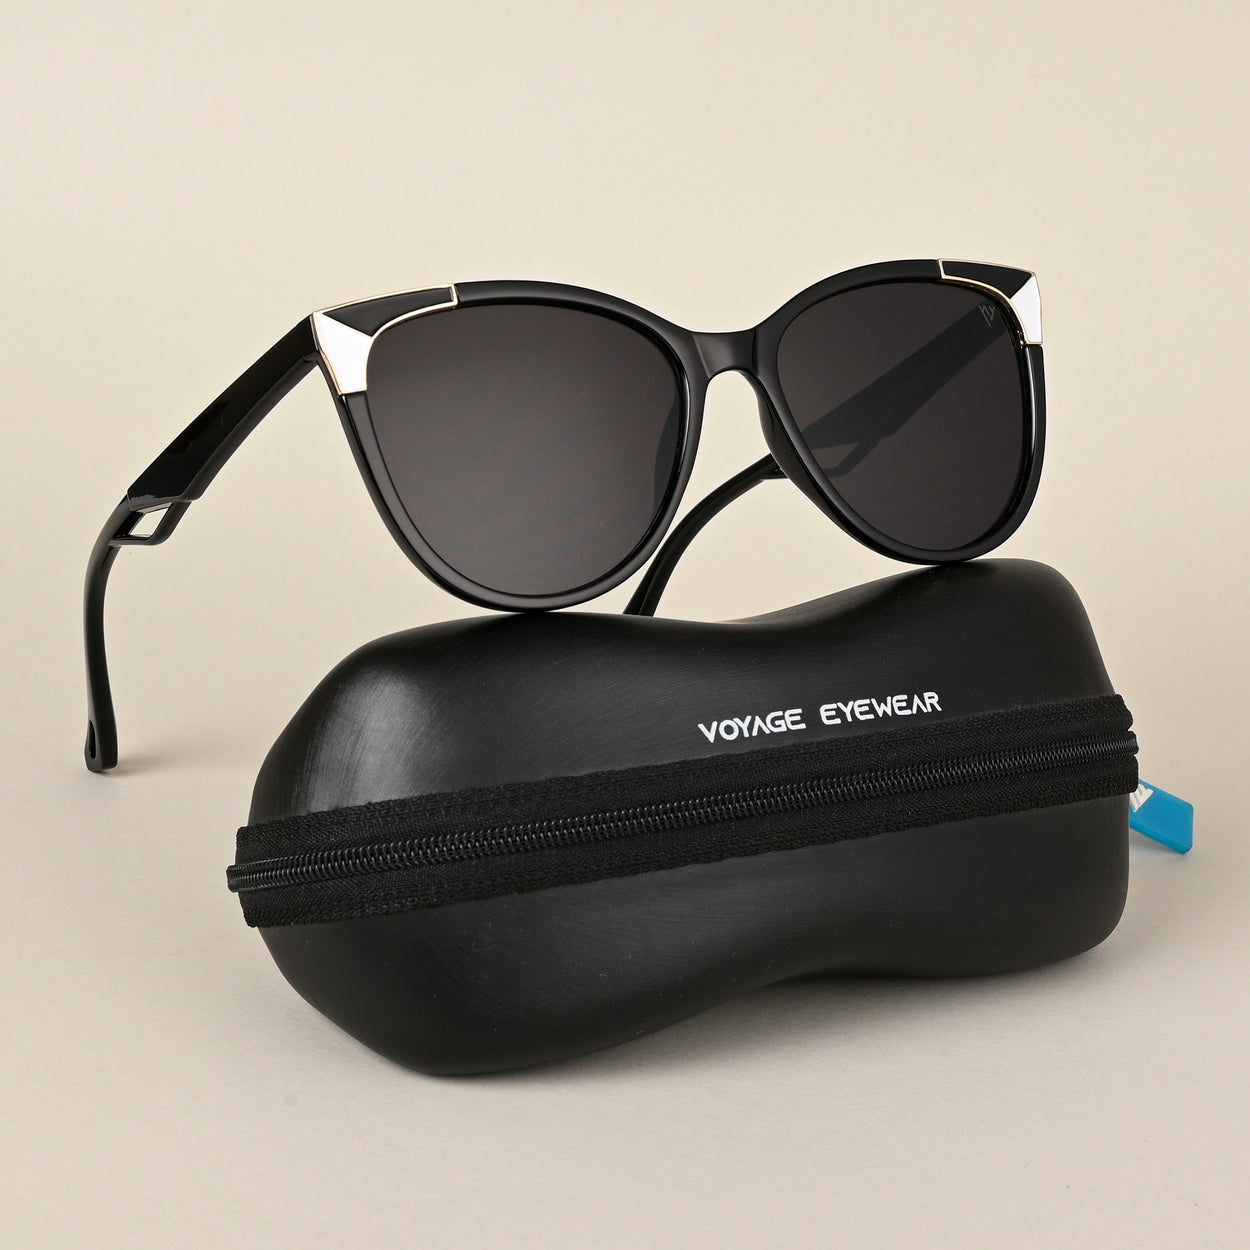 Voyage Black Cateye Sunglasses for Women (W9056MG4228)